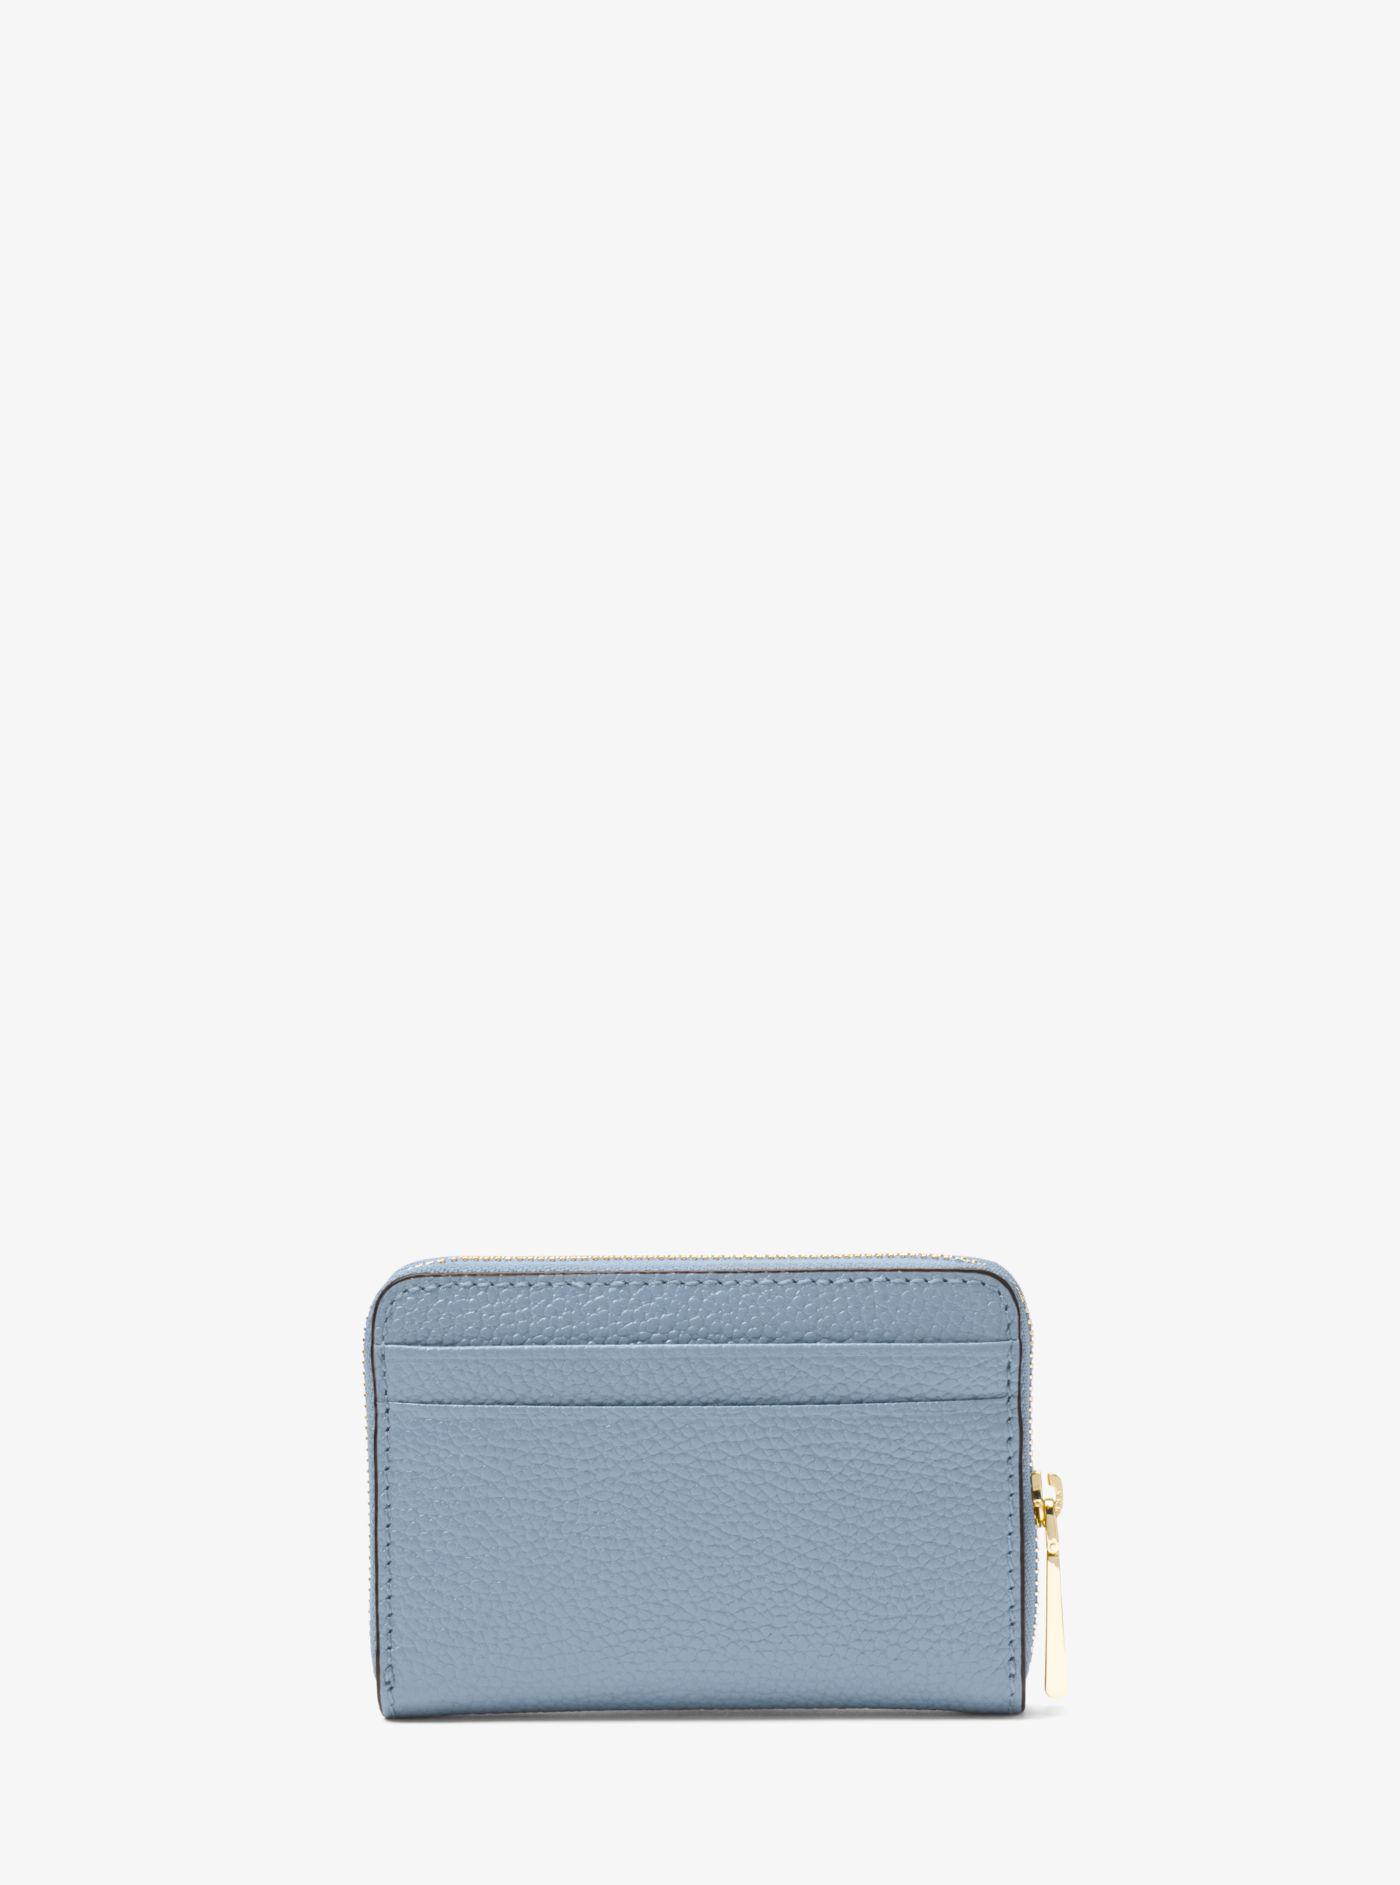 logo alarm frø Michael Kors Small Pebbled Leather Wallet in Pale Blue (Blue) - Lyst